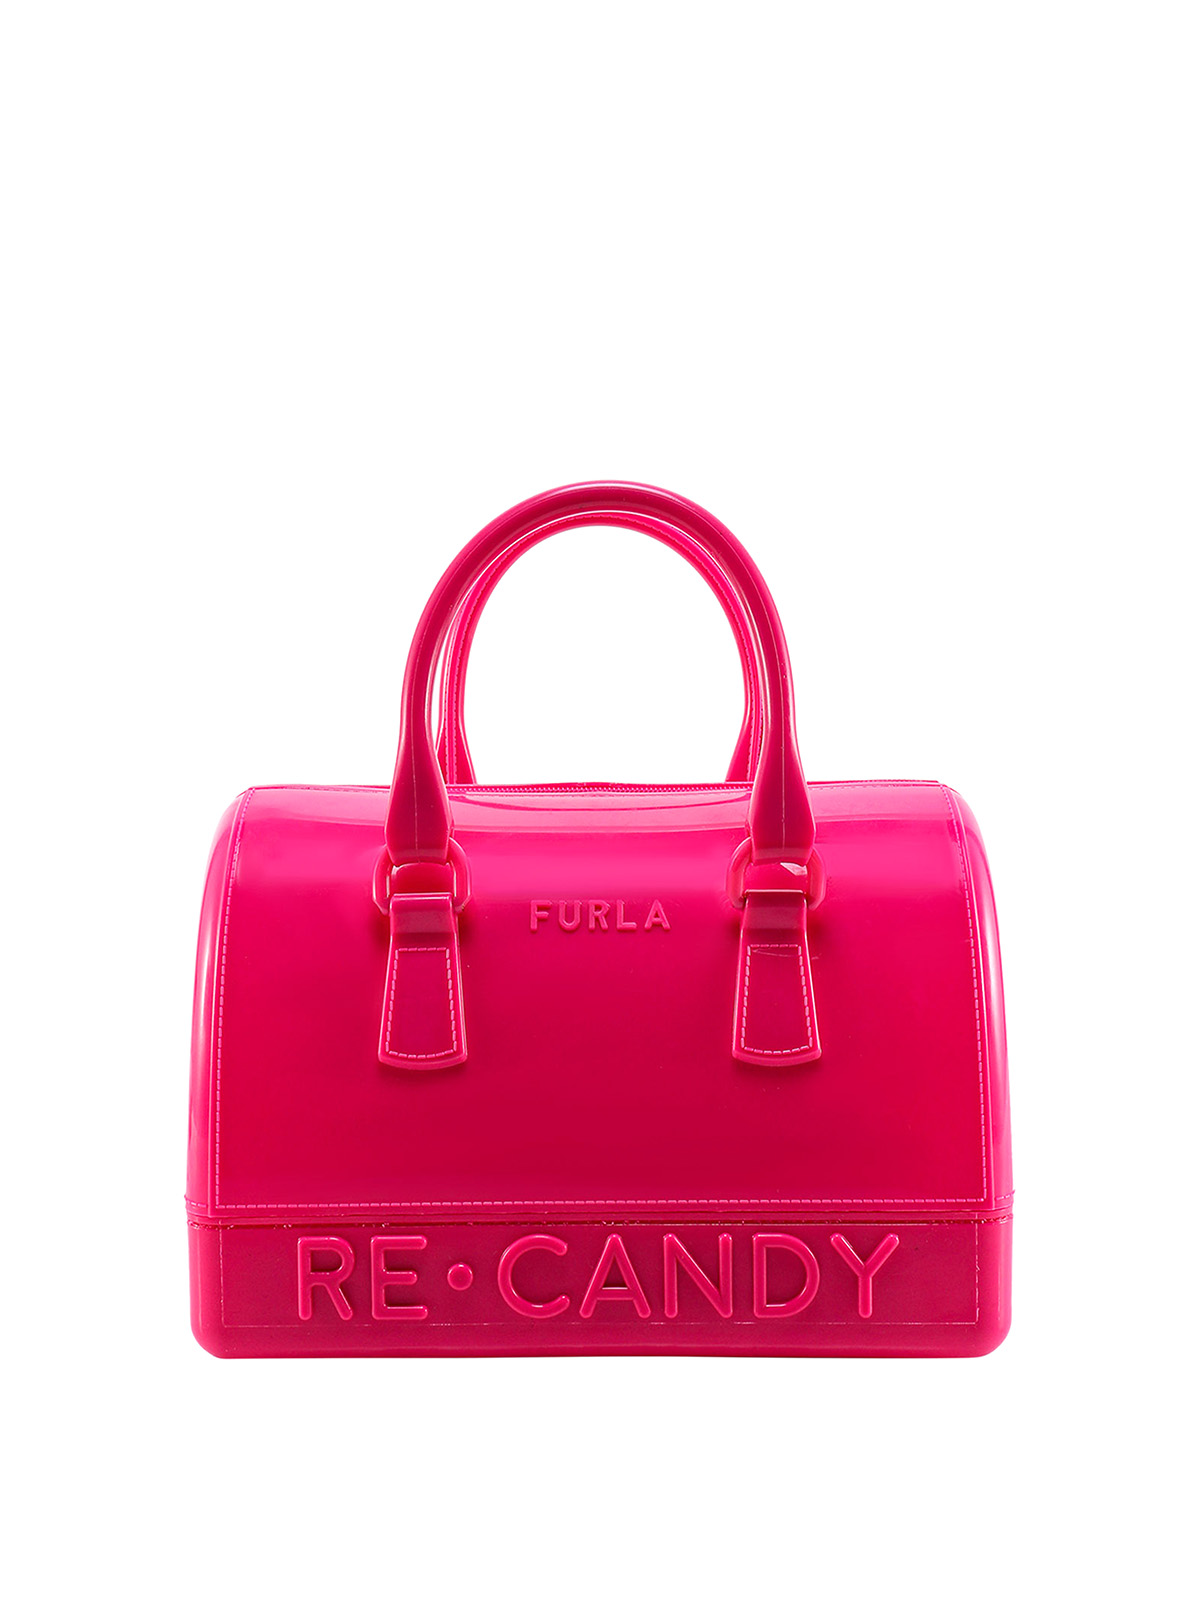 Furla Gold Candy Bag - Etsy